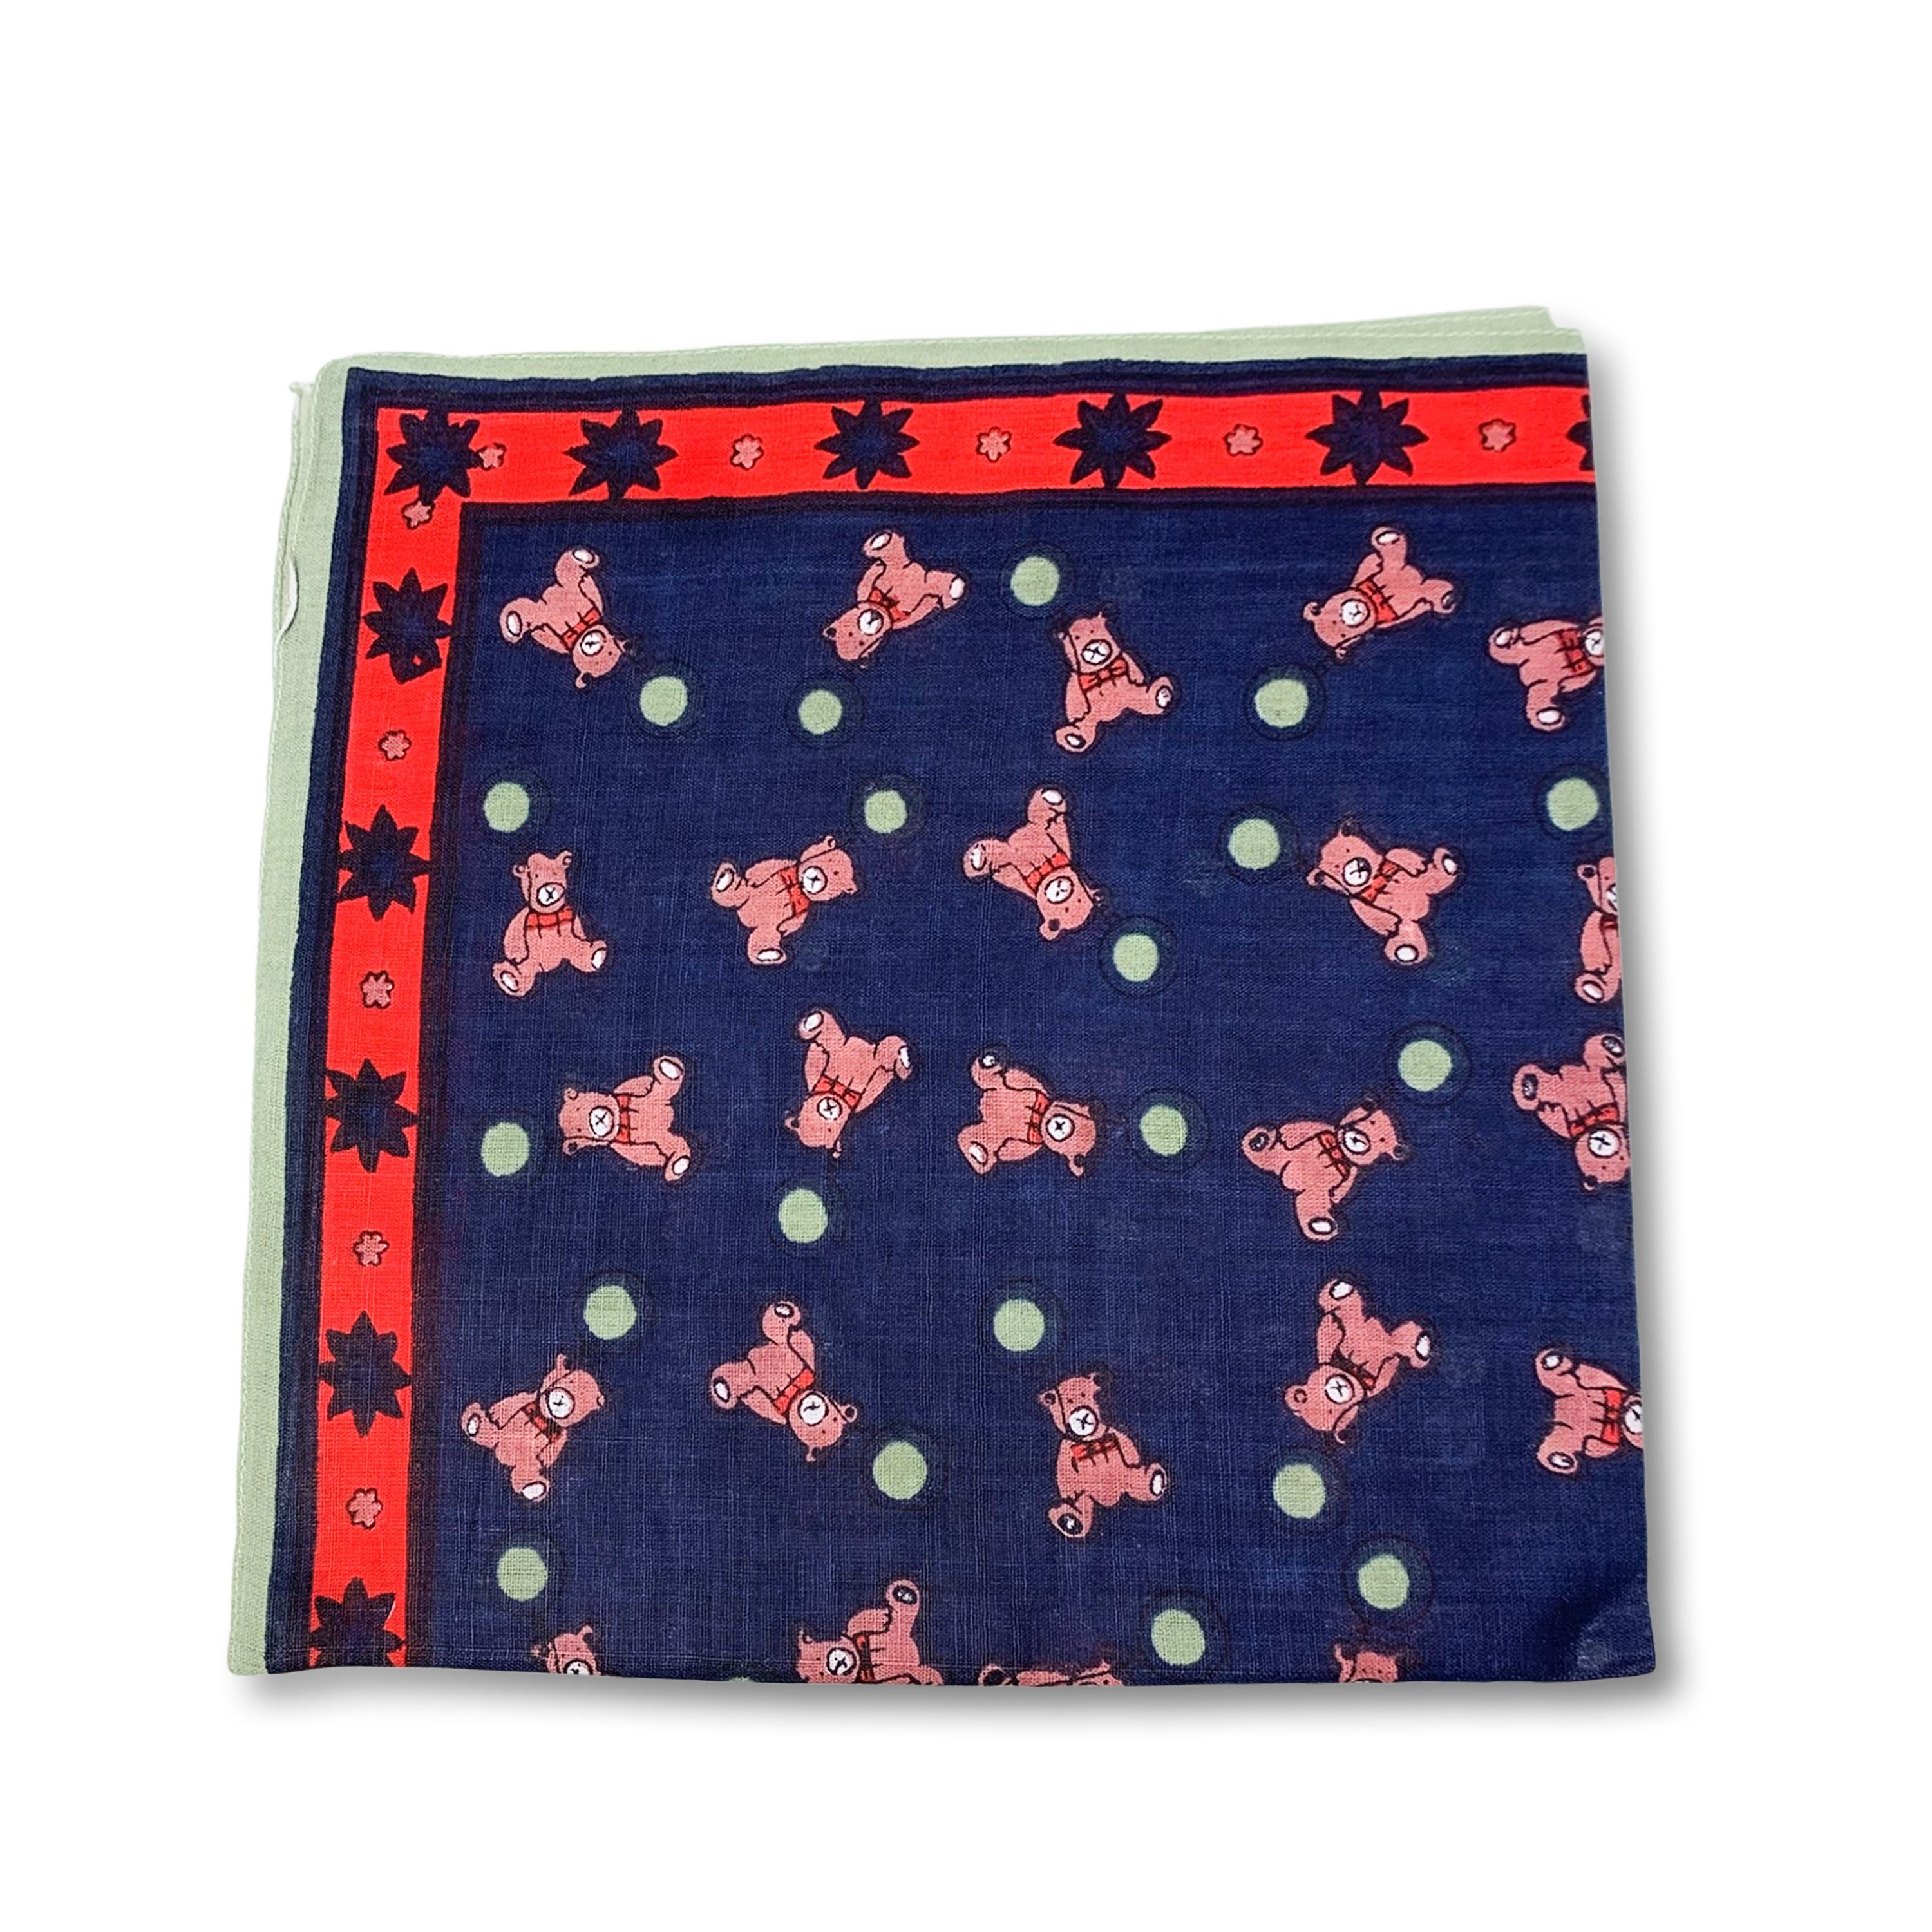 Friseurmeister Halstuch Schal Basic 50cm x 50cm - leichte tücher scarf halstücher halsband Blau Rot Bärchen Muster